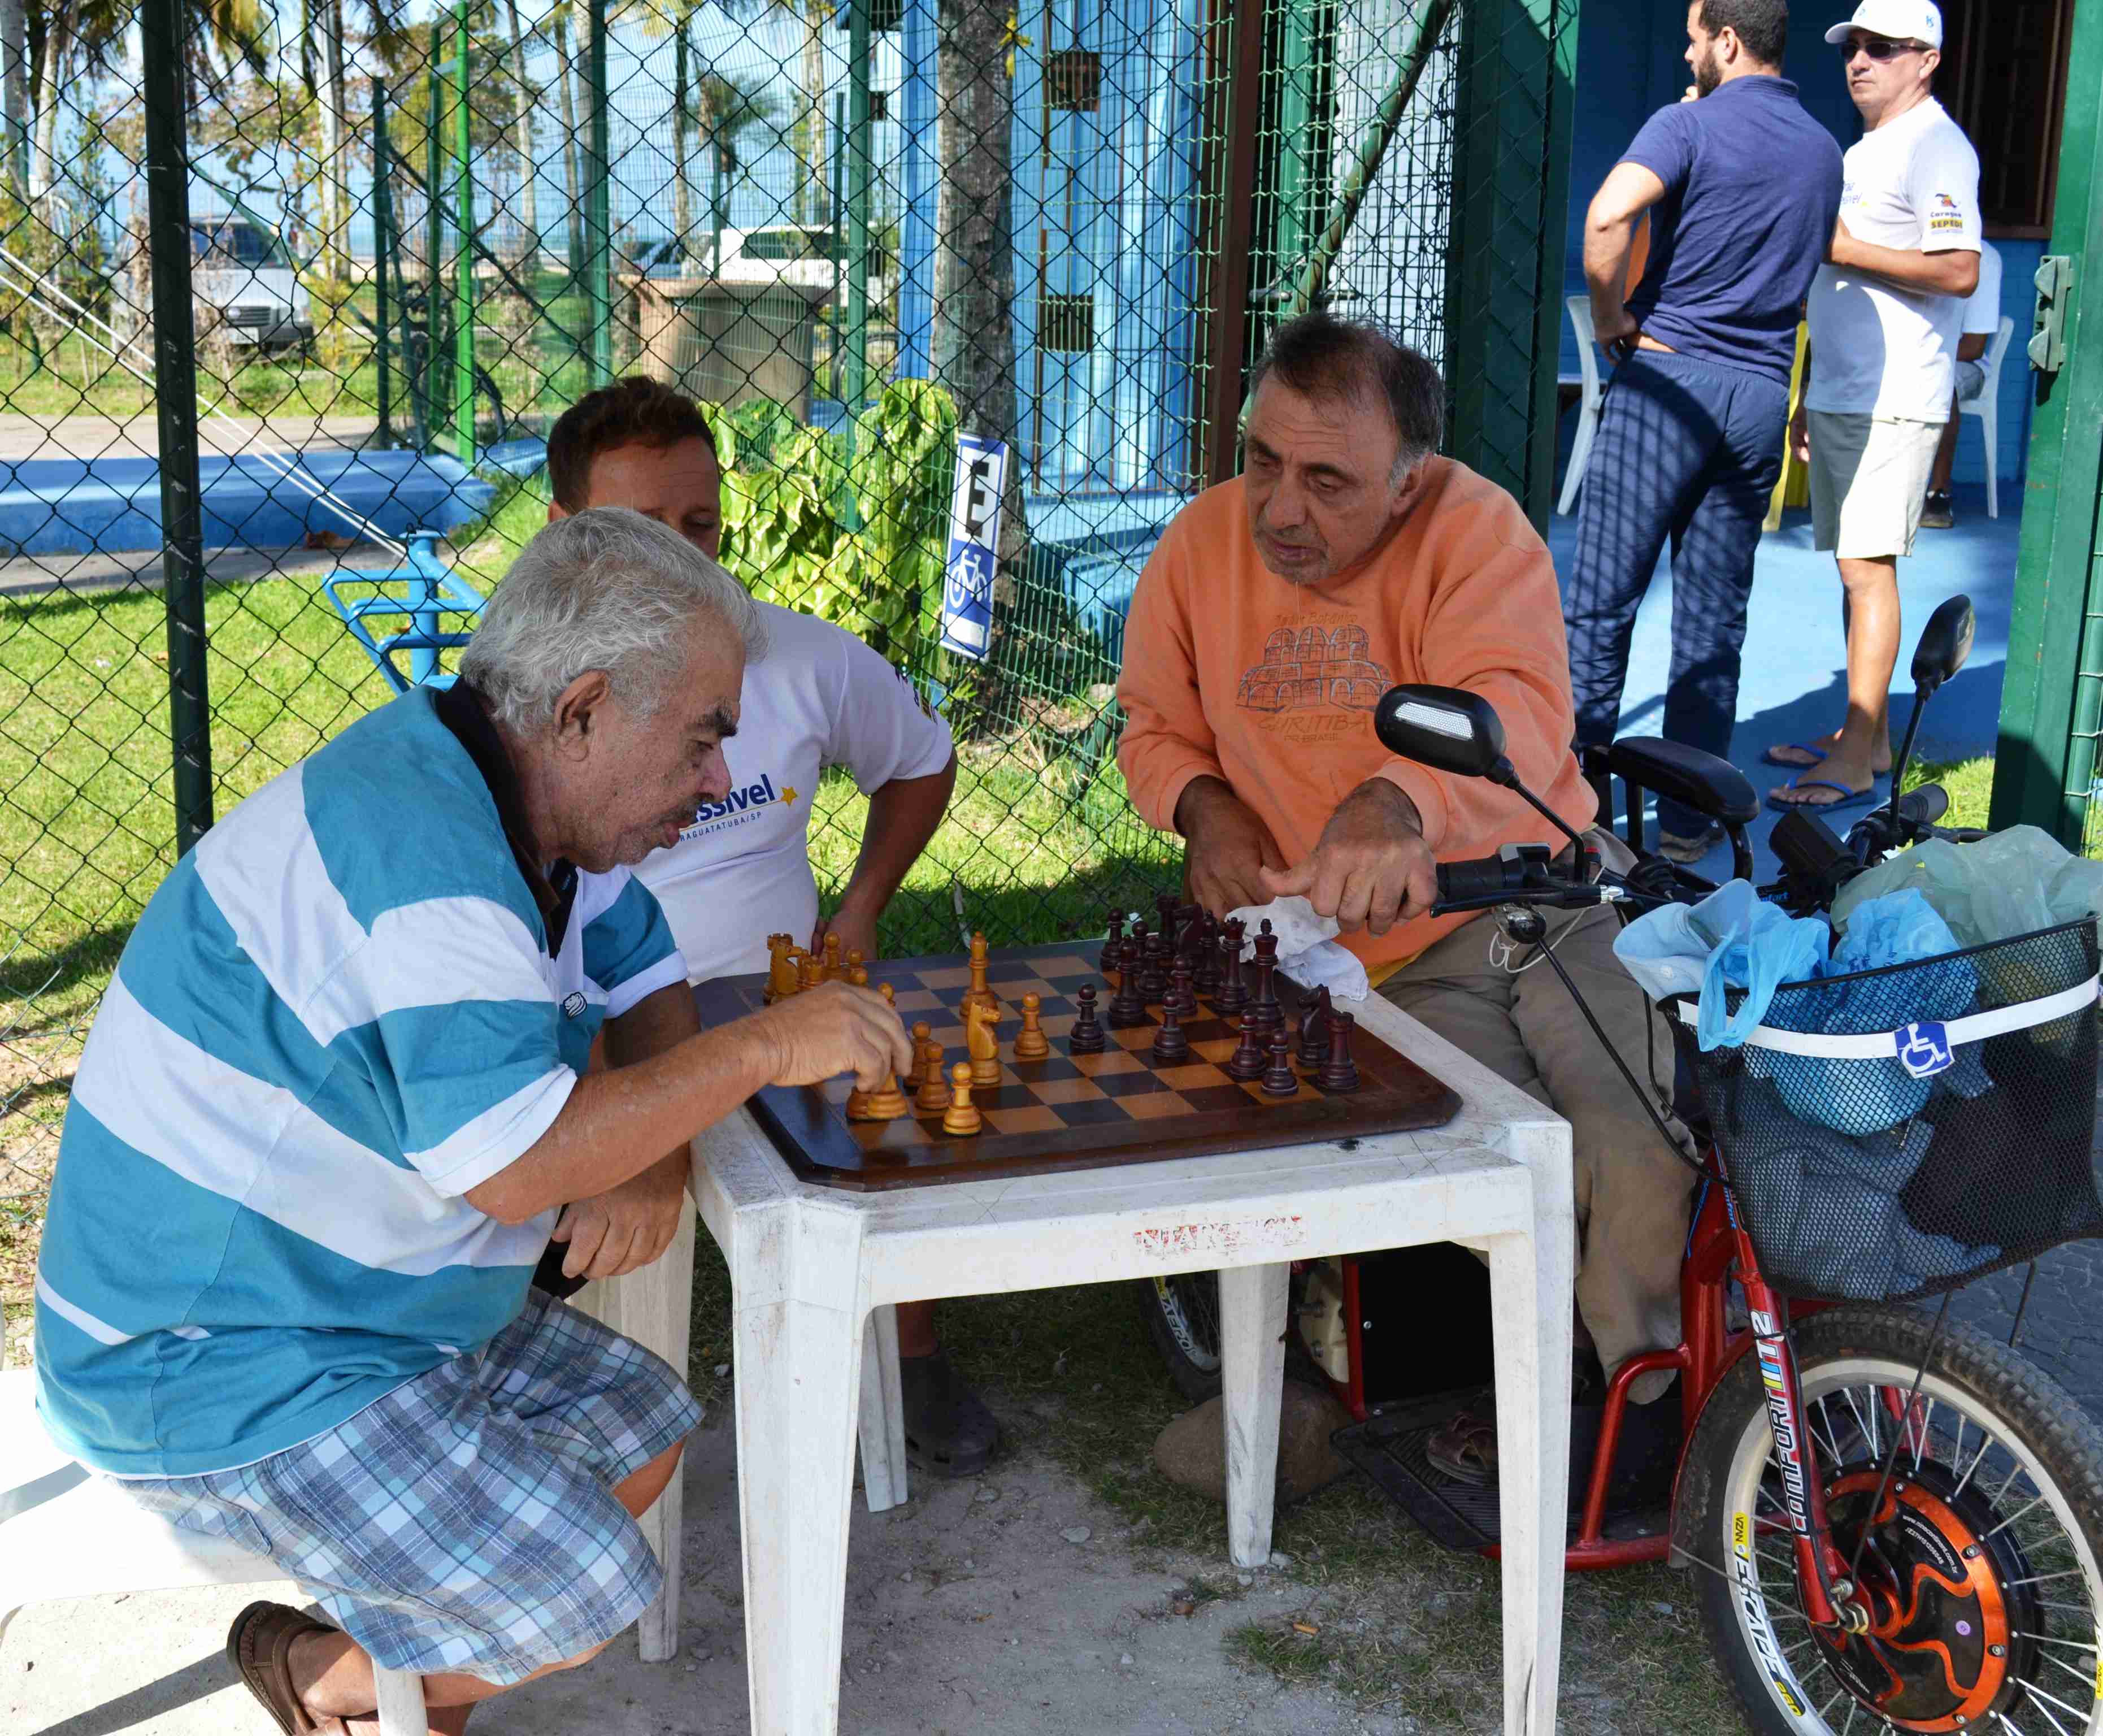 Clube de Xadrez promove torneio aberto - Prefeitura de Curitiba